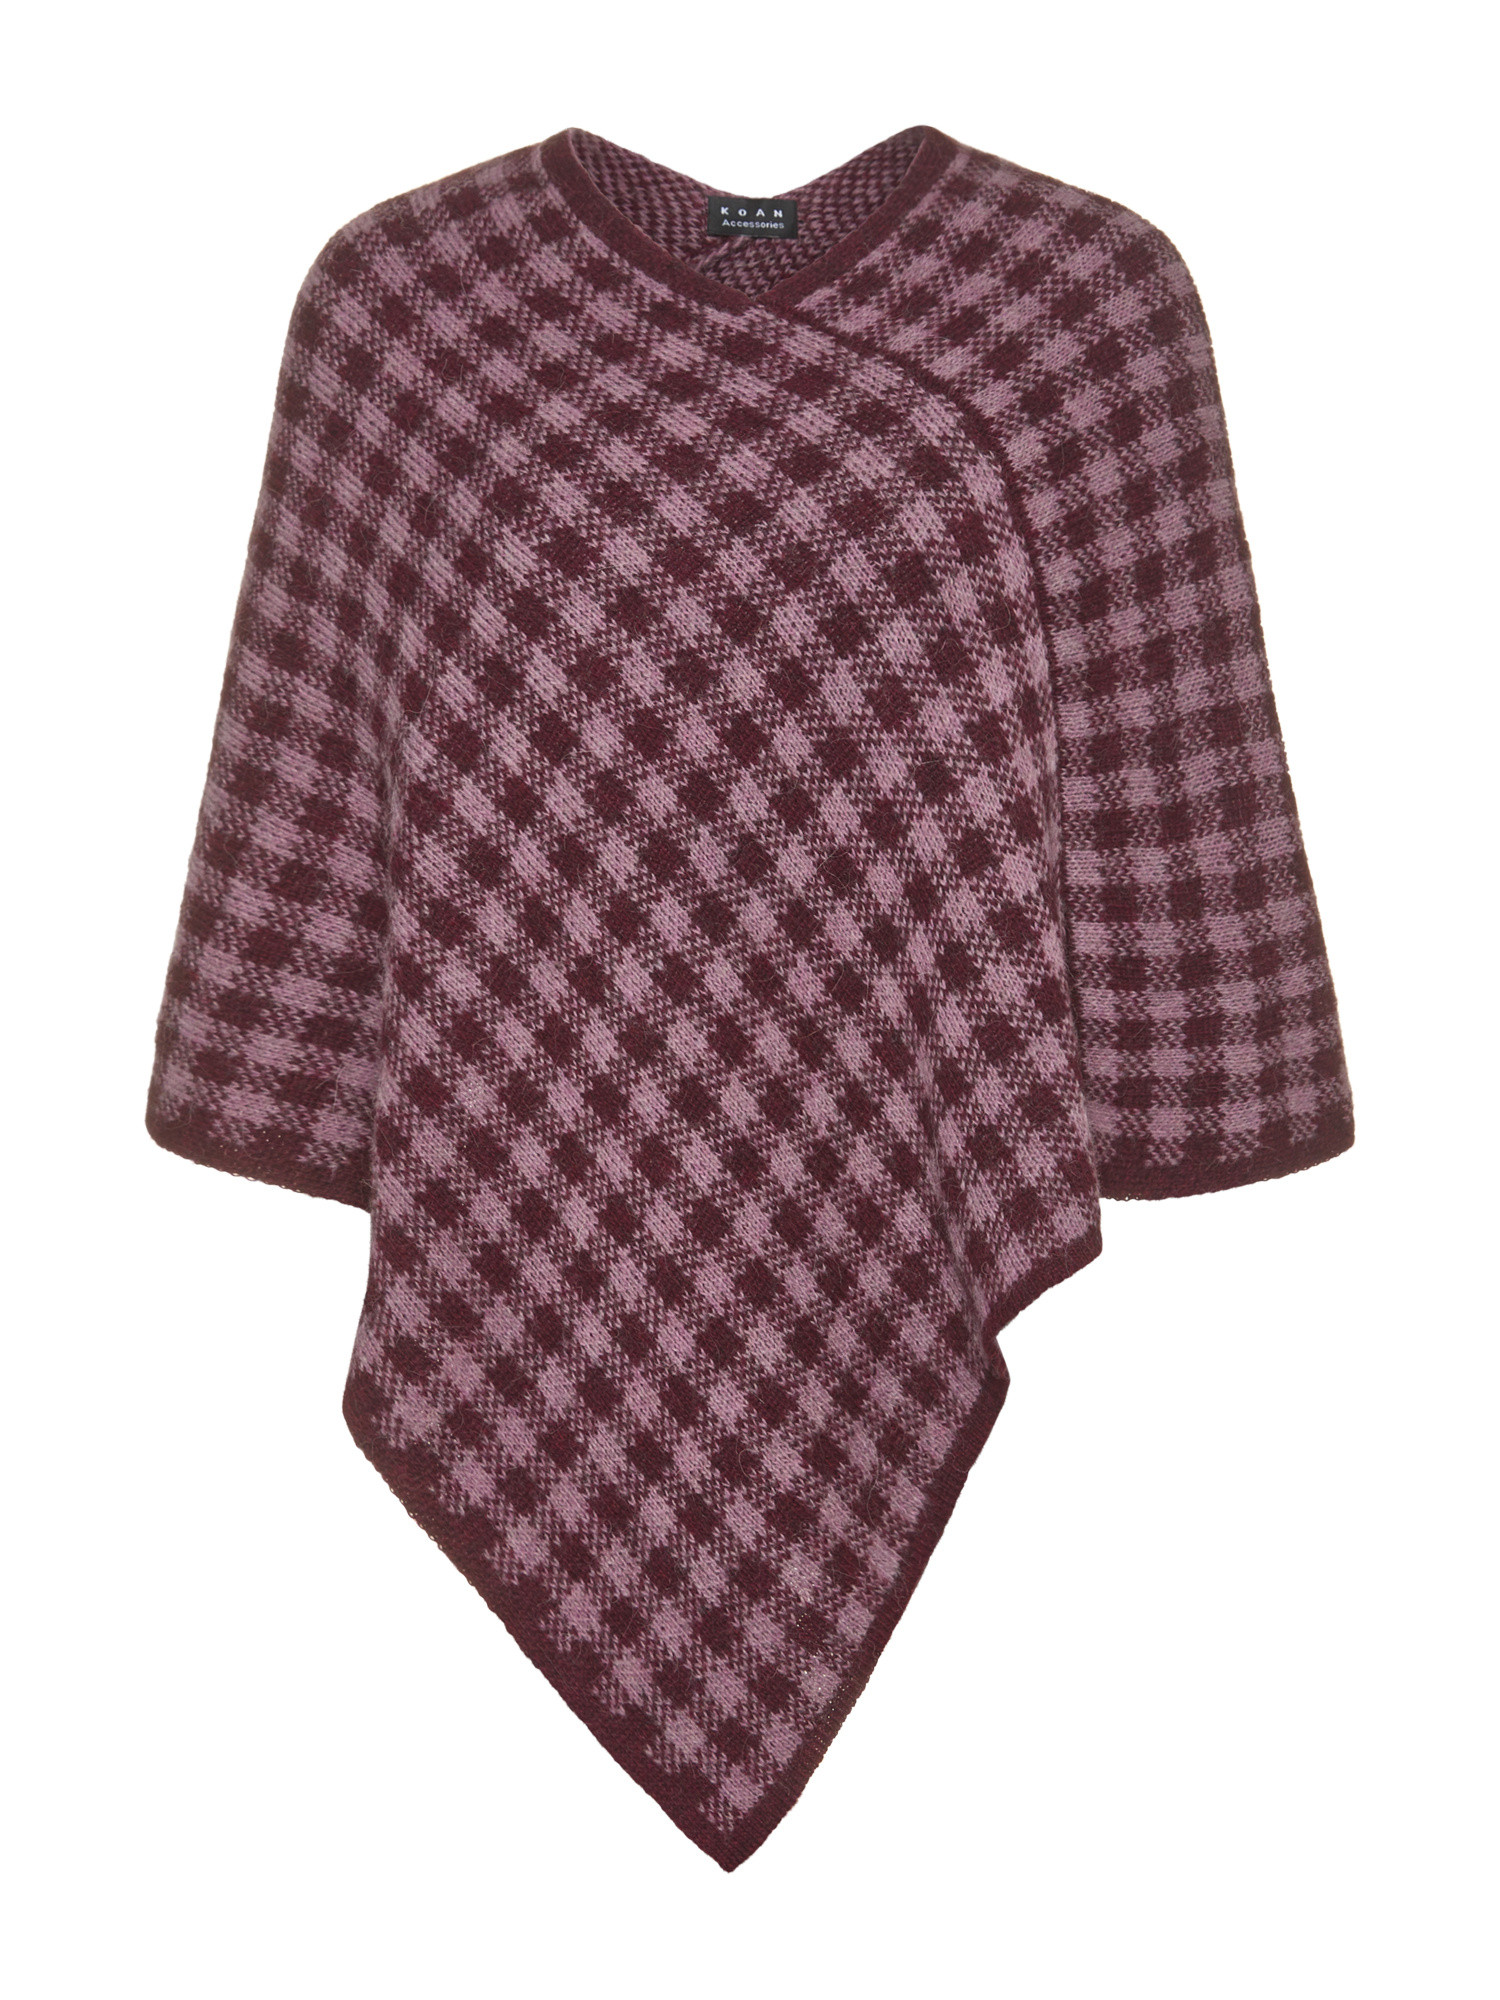 Koan - Checked jacquard knit poncho, Pink, large image number 0